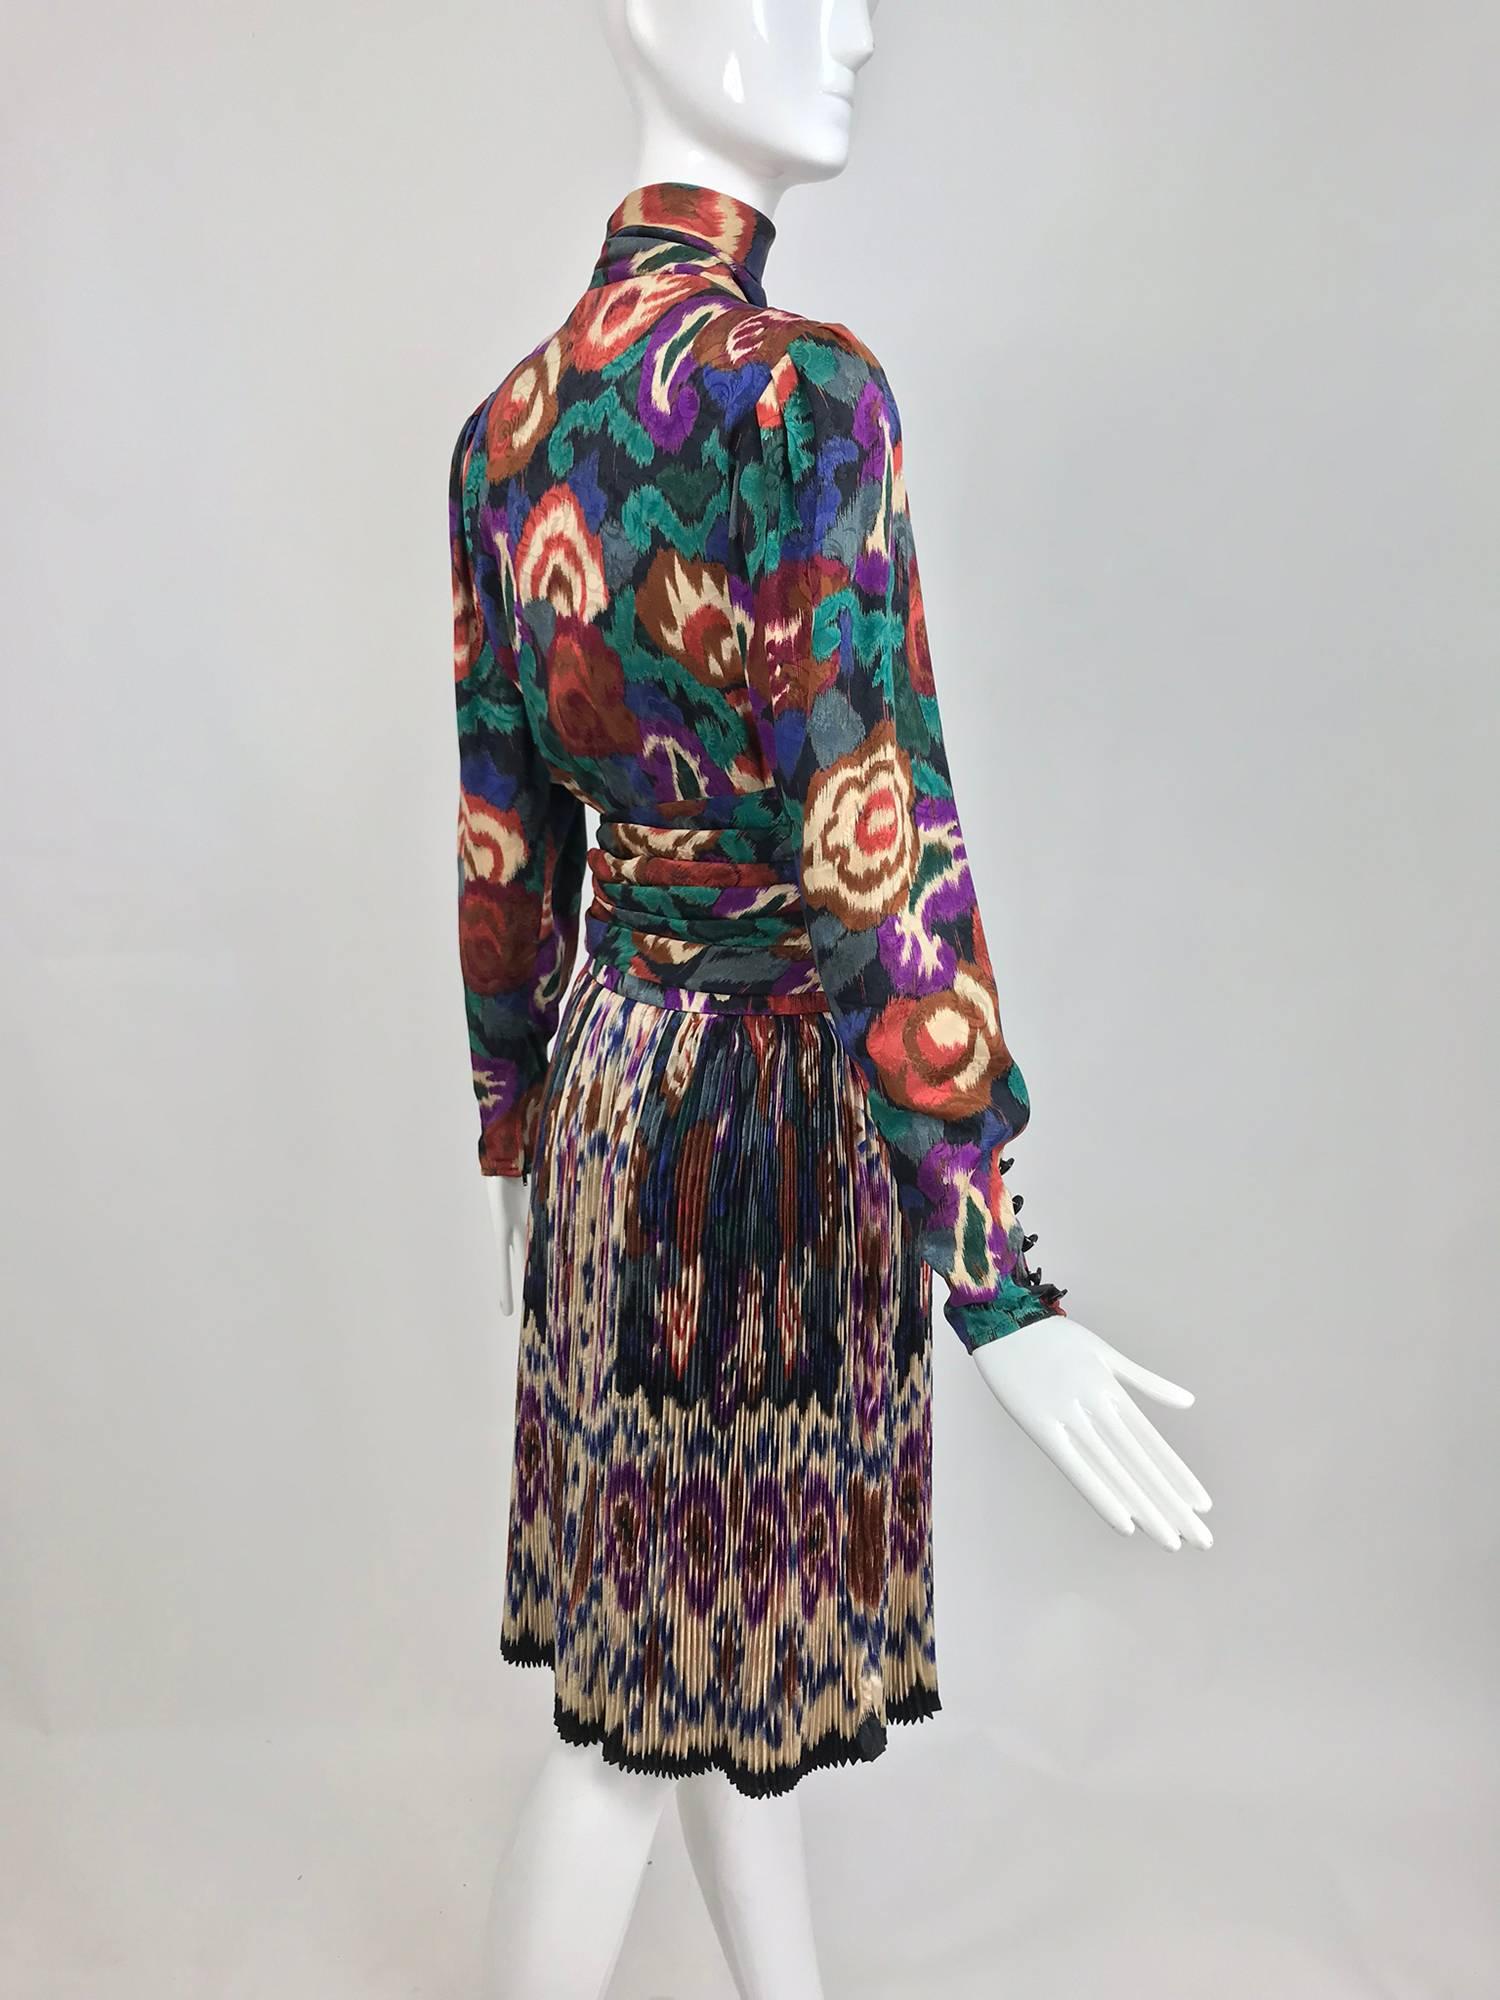 Vintage Ungaro rich silk jacqard ikat print pleated skirt and top 1980s 1